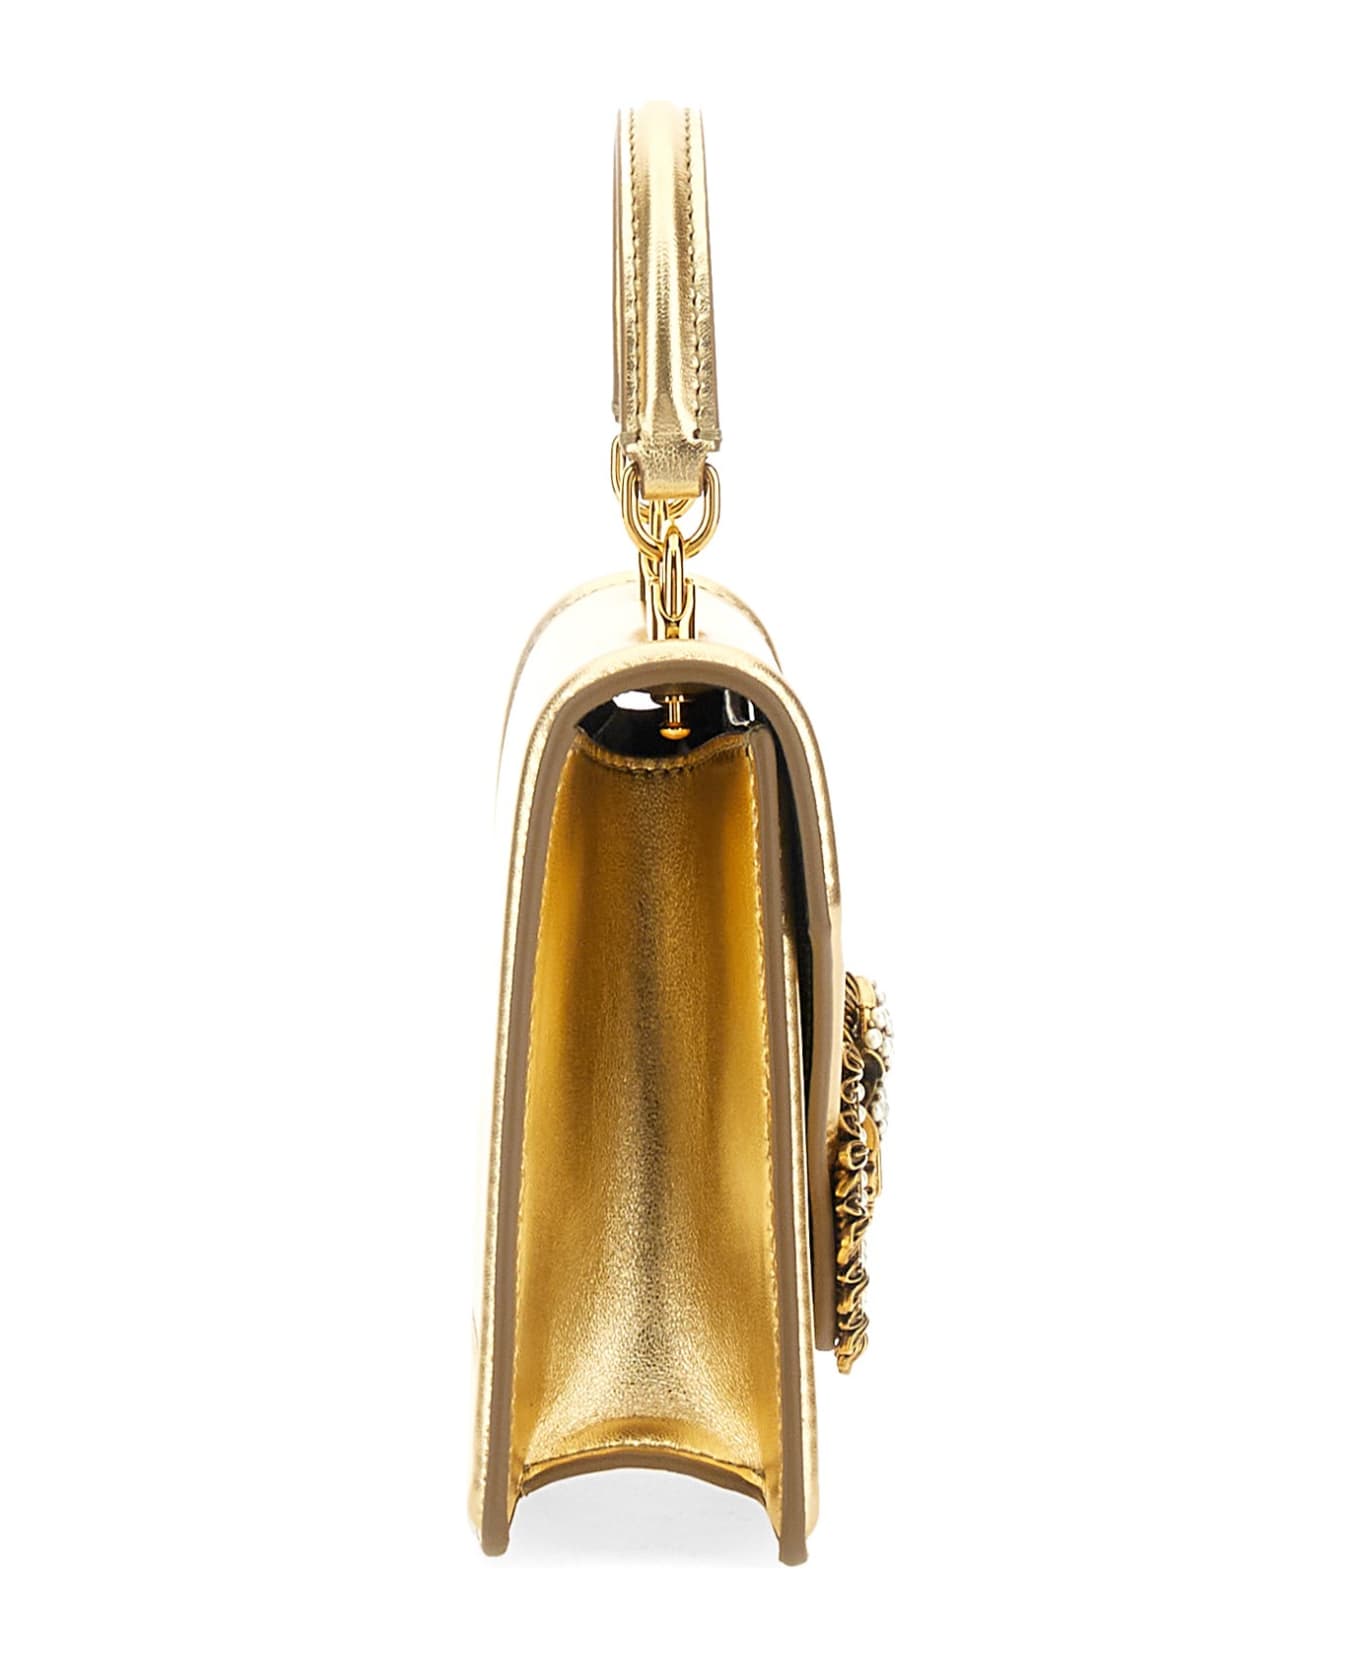 Dolce & Gabbana Devotion Handbag - Gold トートバッグ